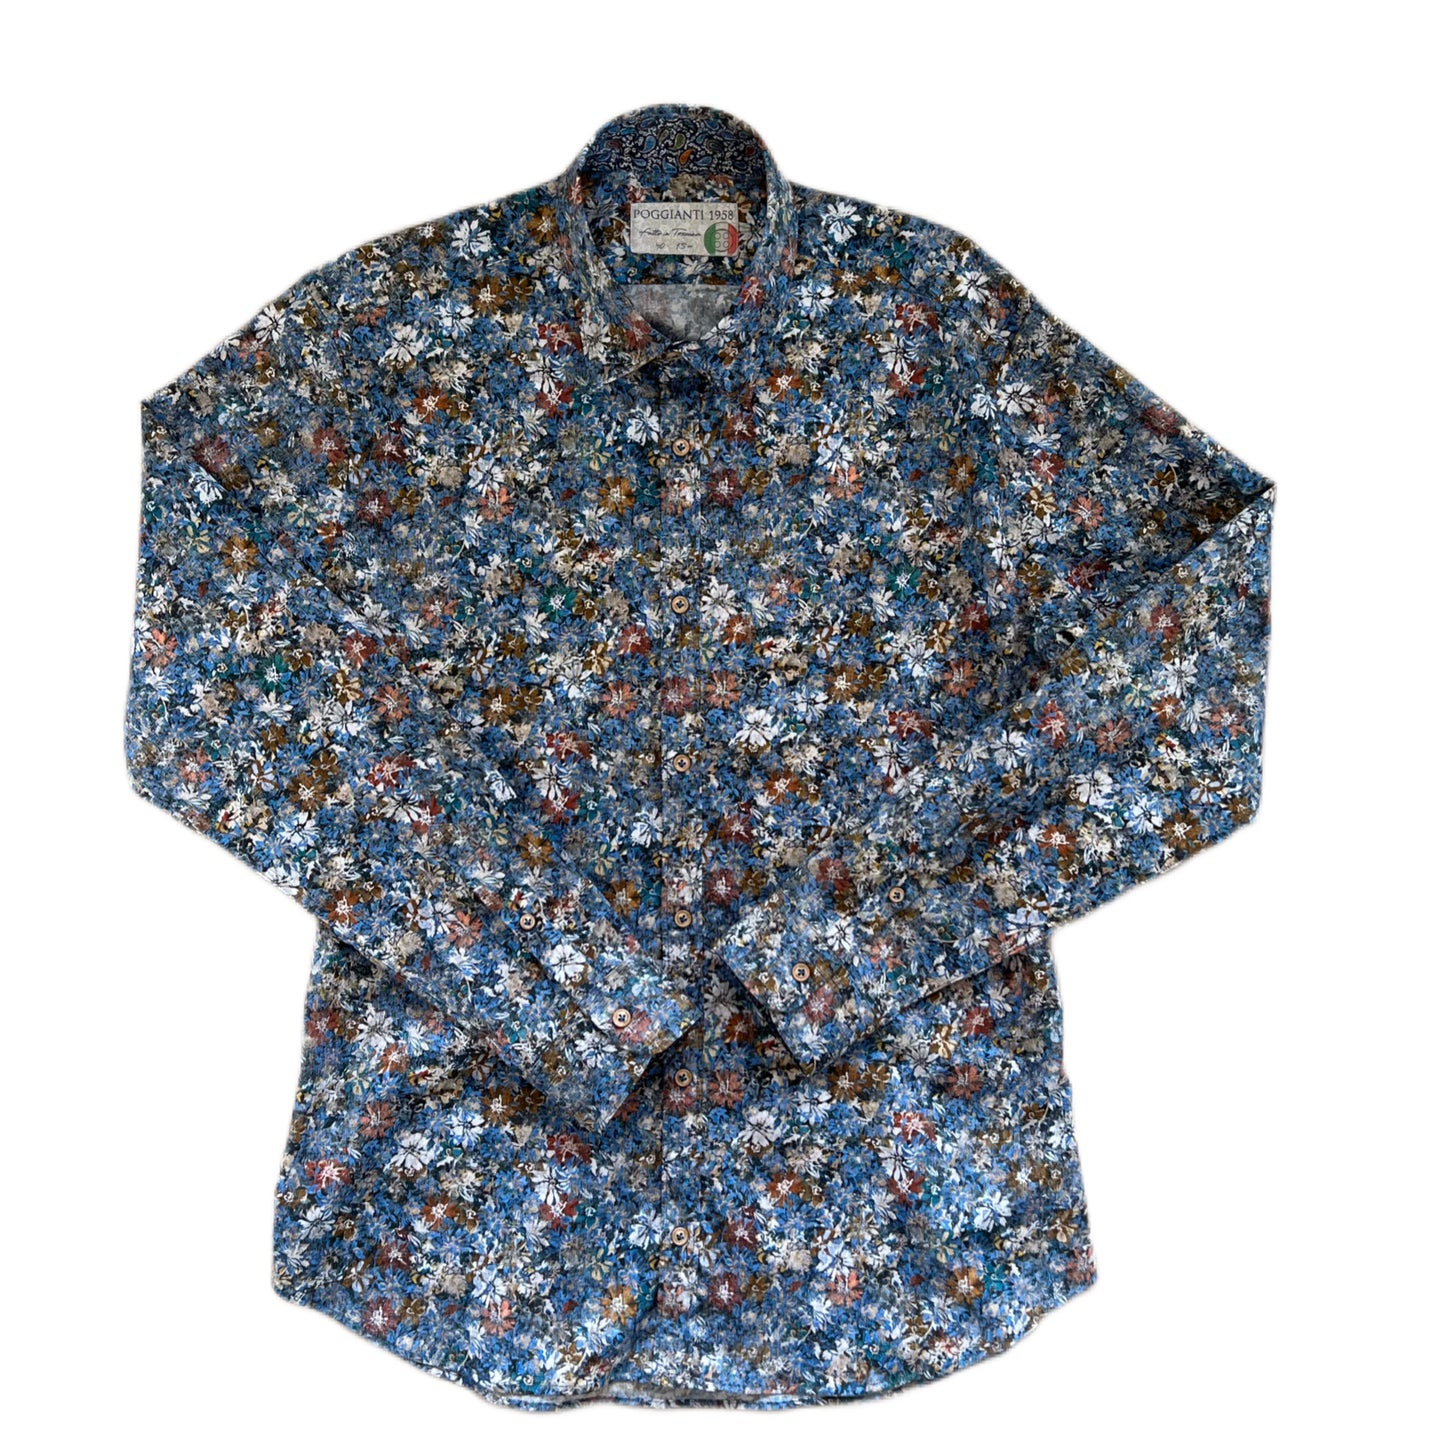 Poggianti 1958 - Shirt Soiana Floral Patterned